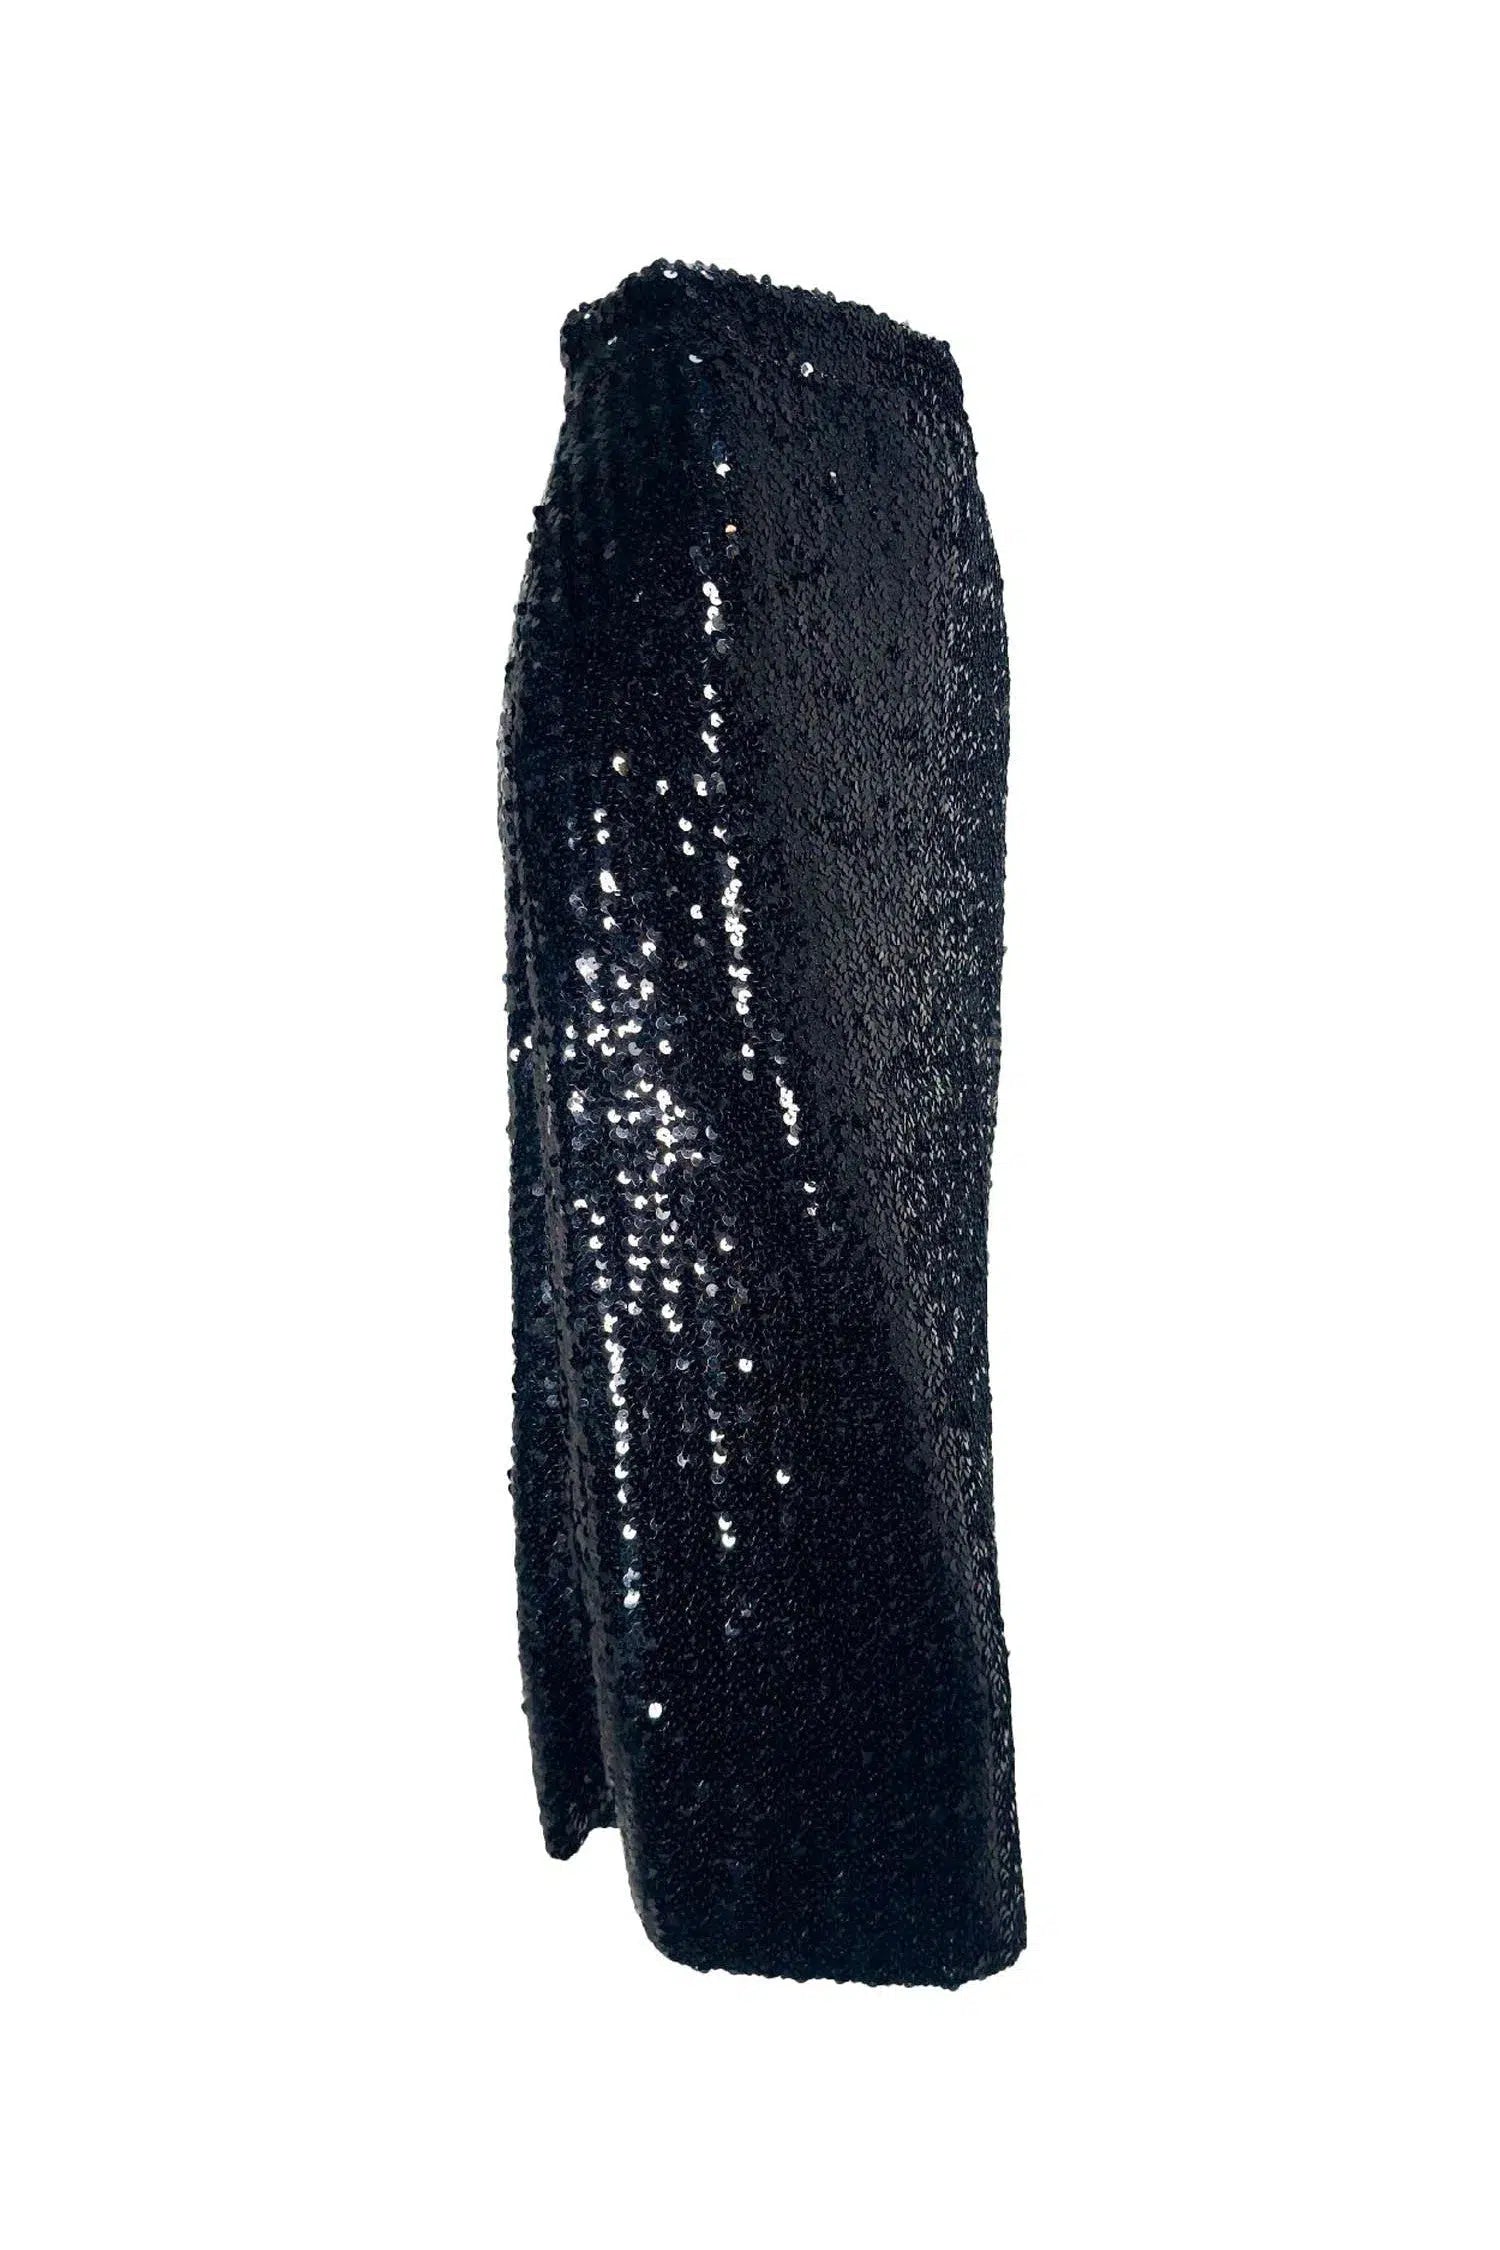 Gucci Black Sequins Thigh Slit Skirt NWT Sz 42/6 - Foxy Couture Carmel